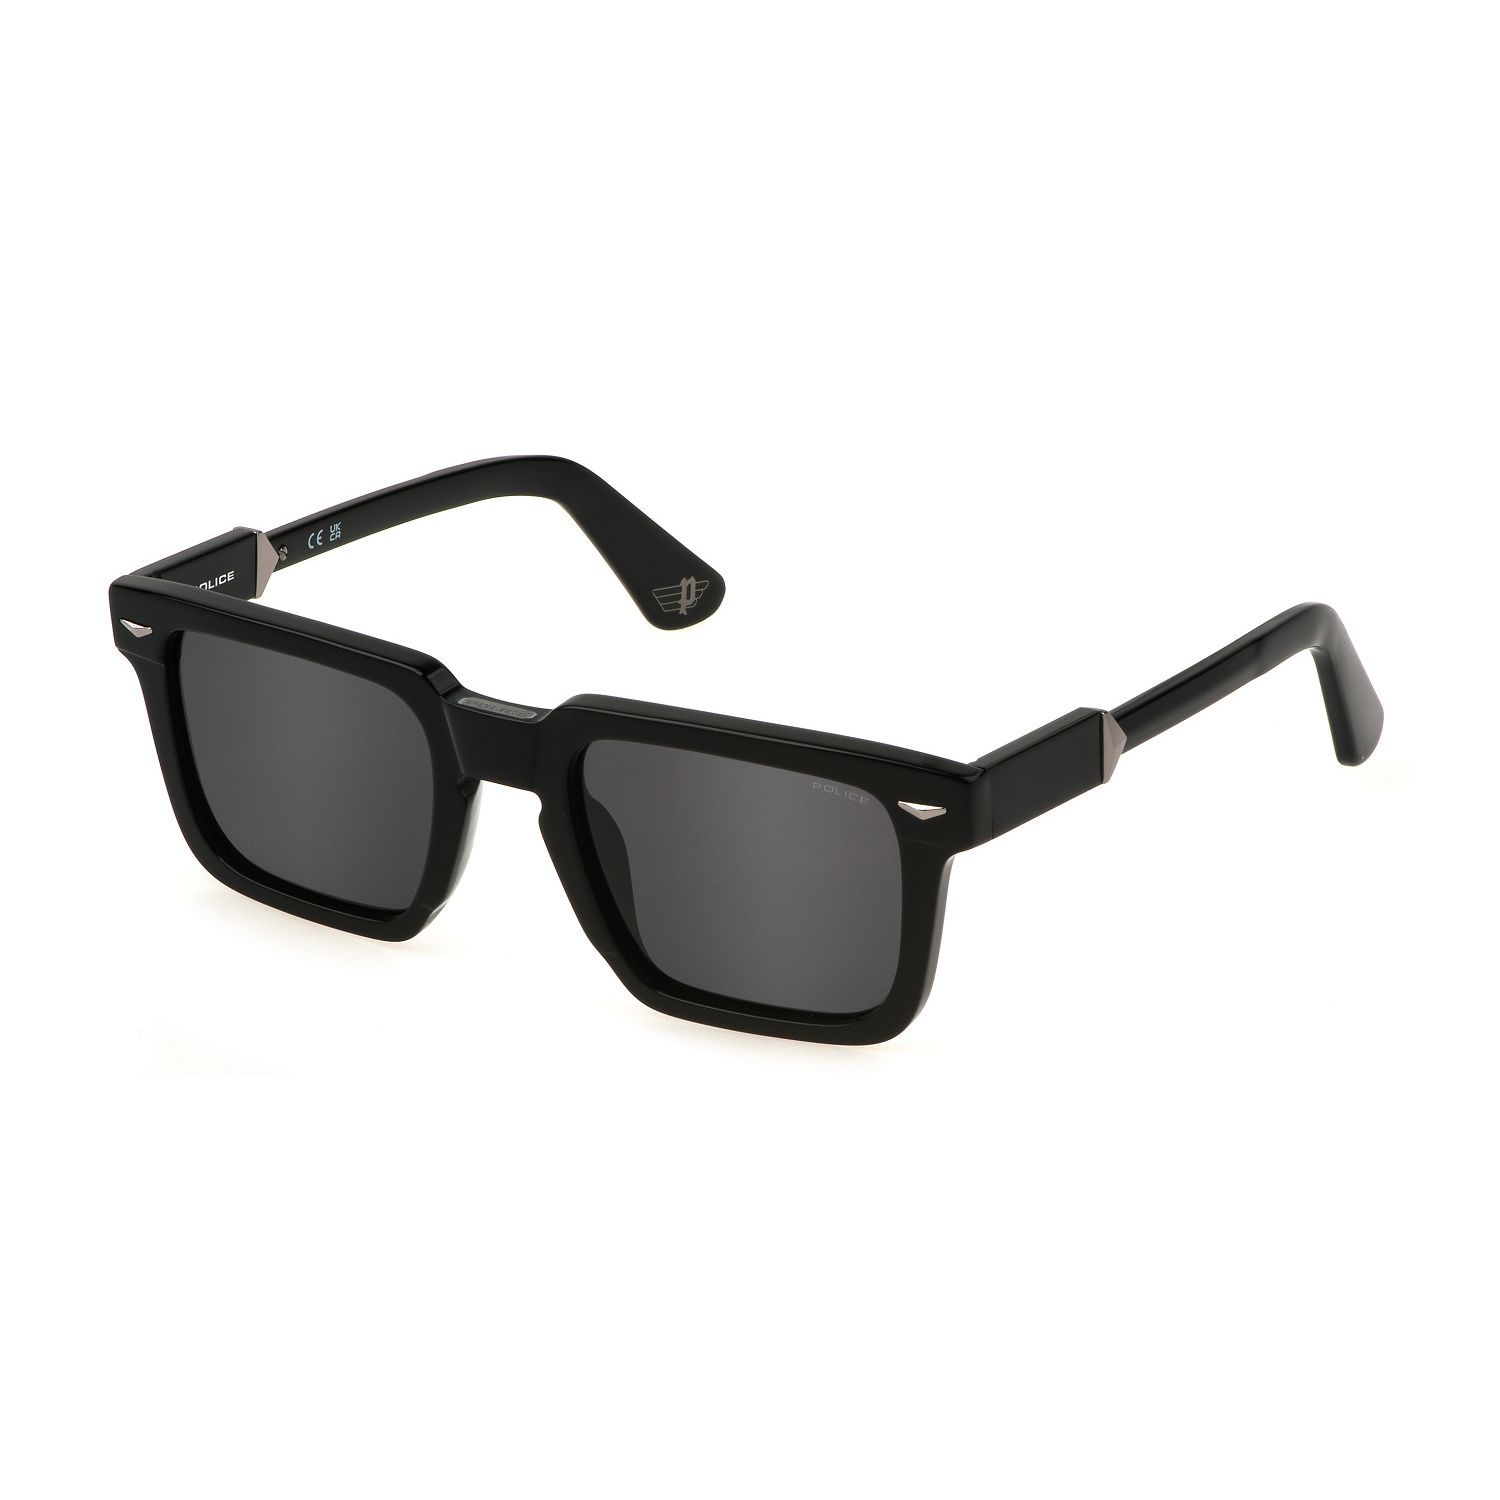 SPLL88M Square Sunglasses 0700 - size 52